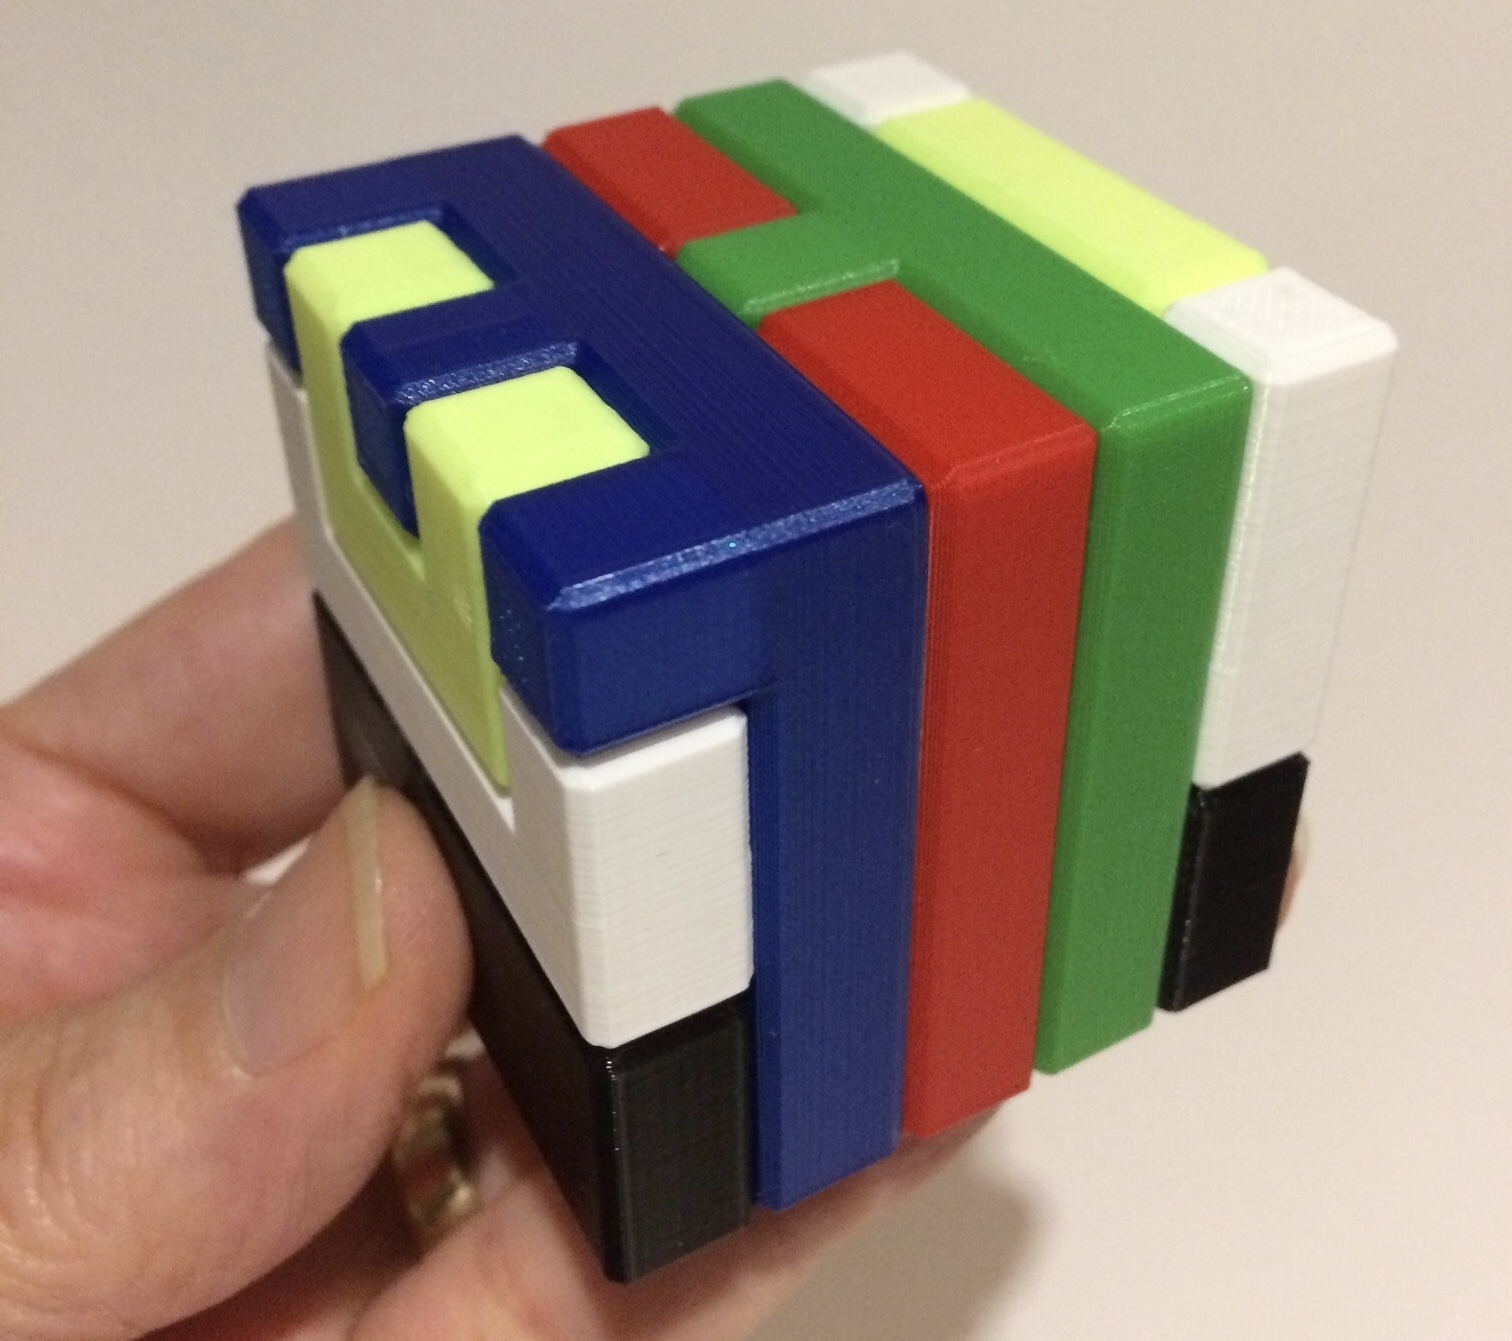 3D Printed Printable Interlocking Puzzle #4 - Level 11Richgain - Printable 3D Puzzles